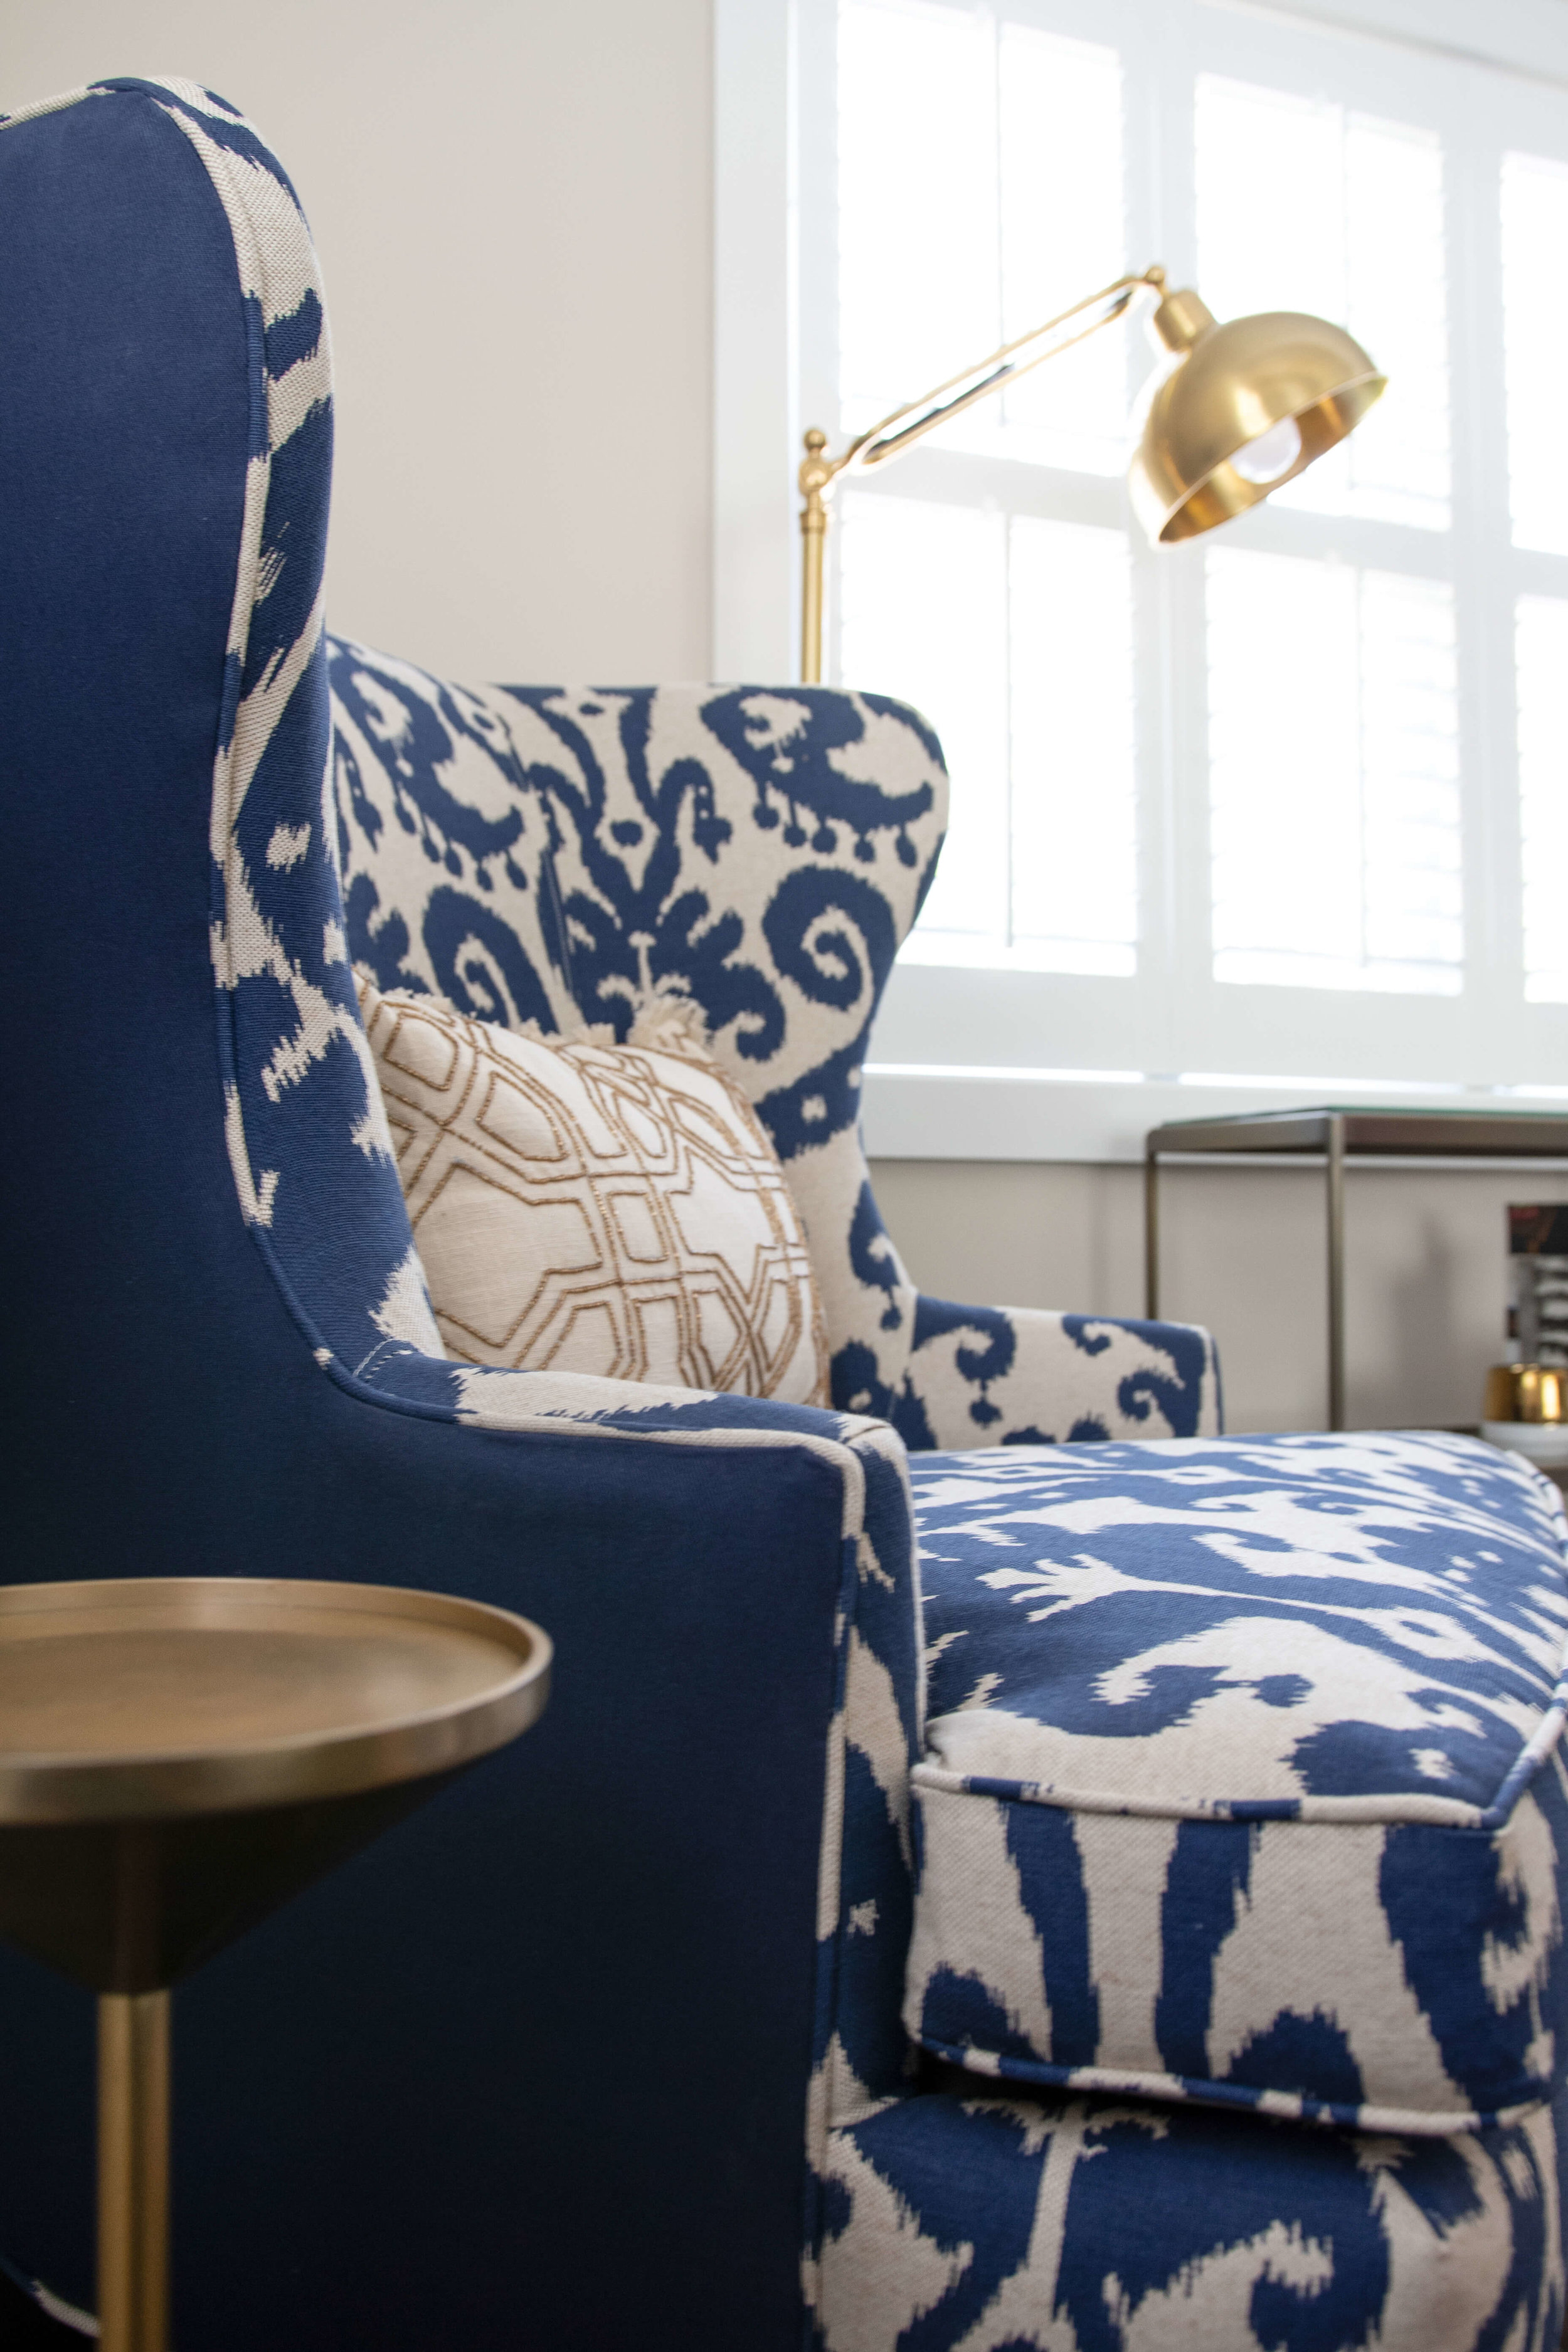 design 2 order julie h sheridan interior design cottage retreat lounge chair with fabric.jpg